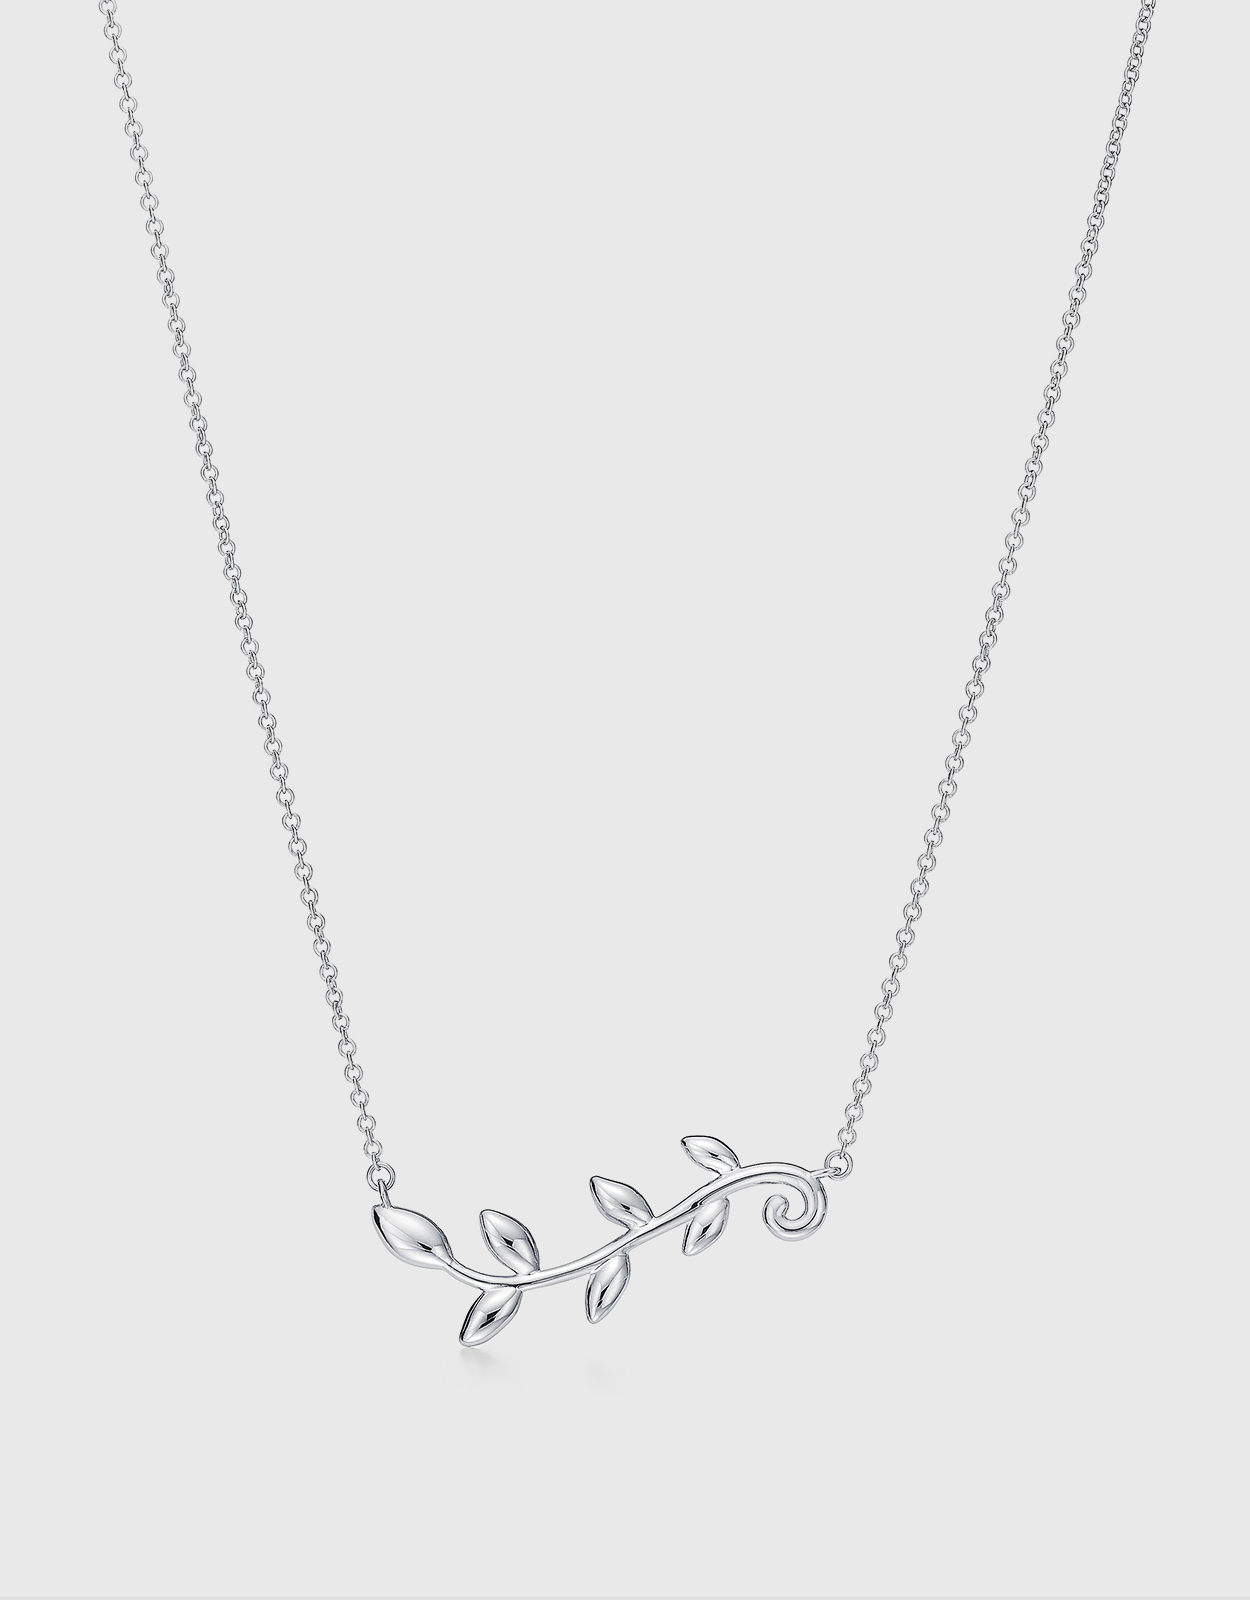 Tiffany & Co Paloma Picasso Olive Leaf Heart Necklace 18” | eBay